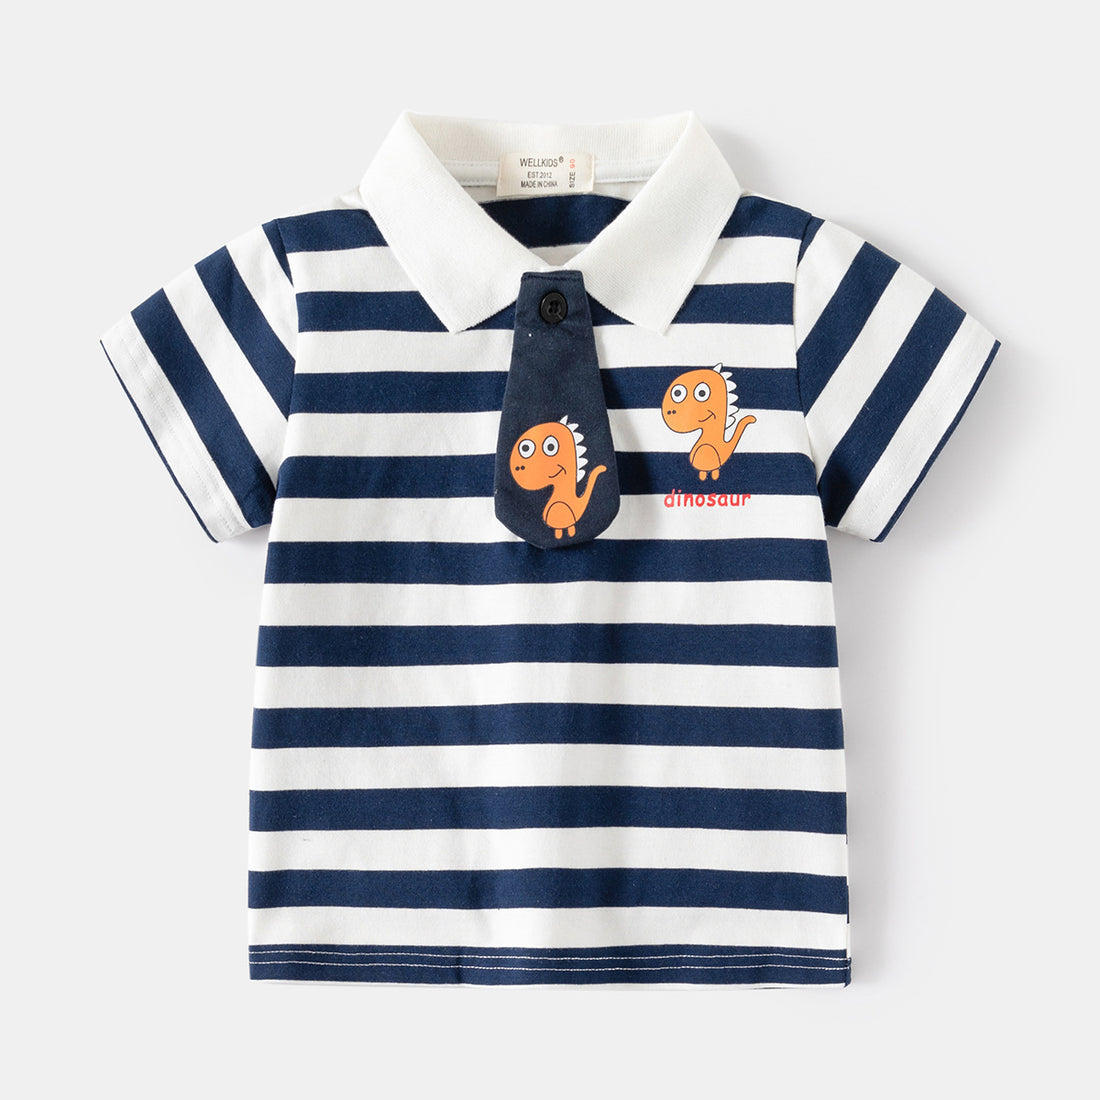 [5131077] - Baju Atasan Kaos Kerah Polo Fashion Import Anak Laki-Laki - Motif Striped Dinosaur